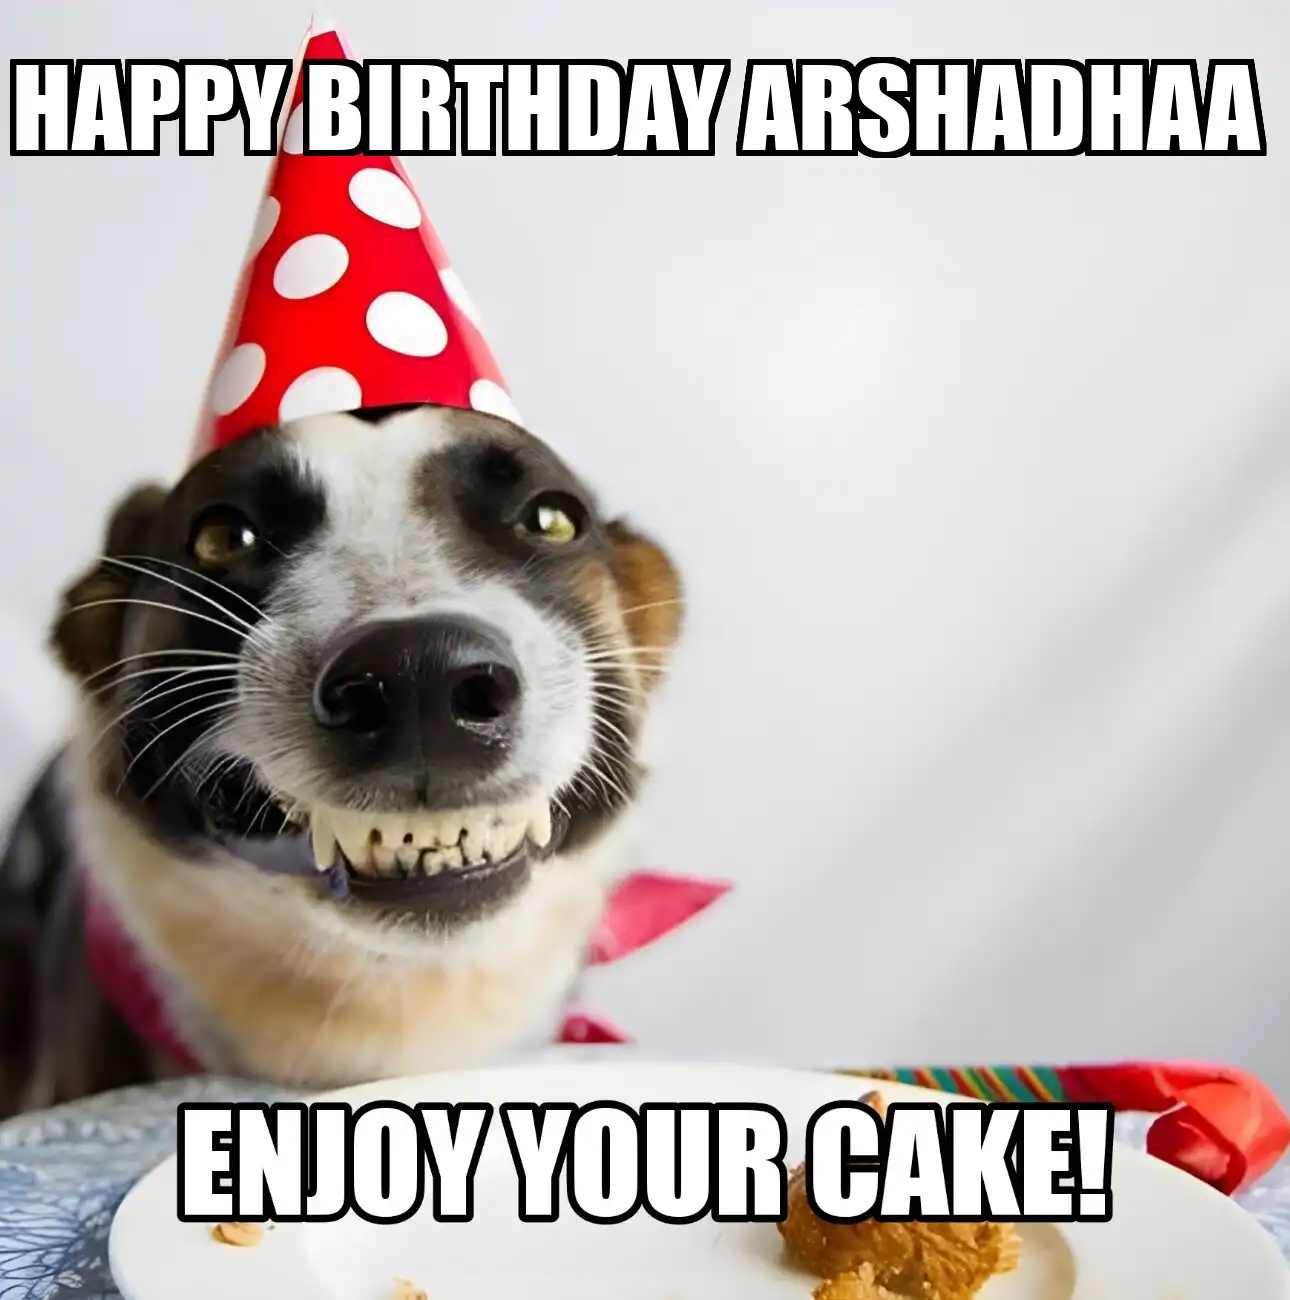 Happy Birthday Arshadhaa Enjoy Your Cake Dog Meme